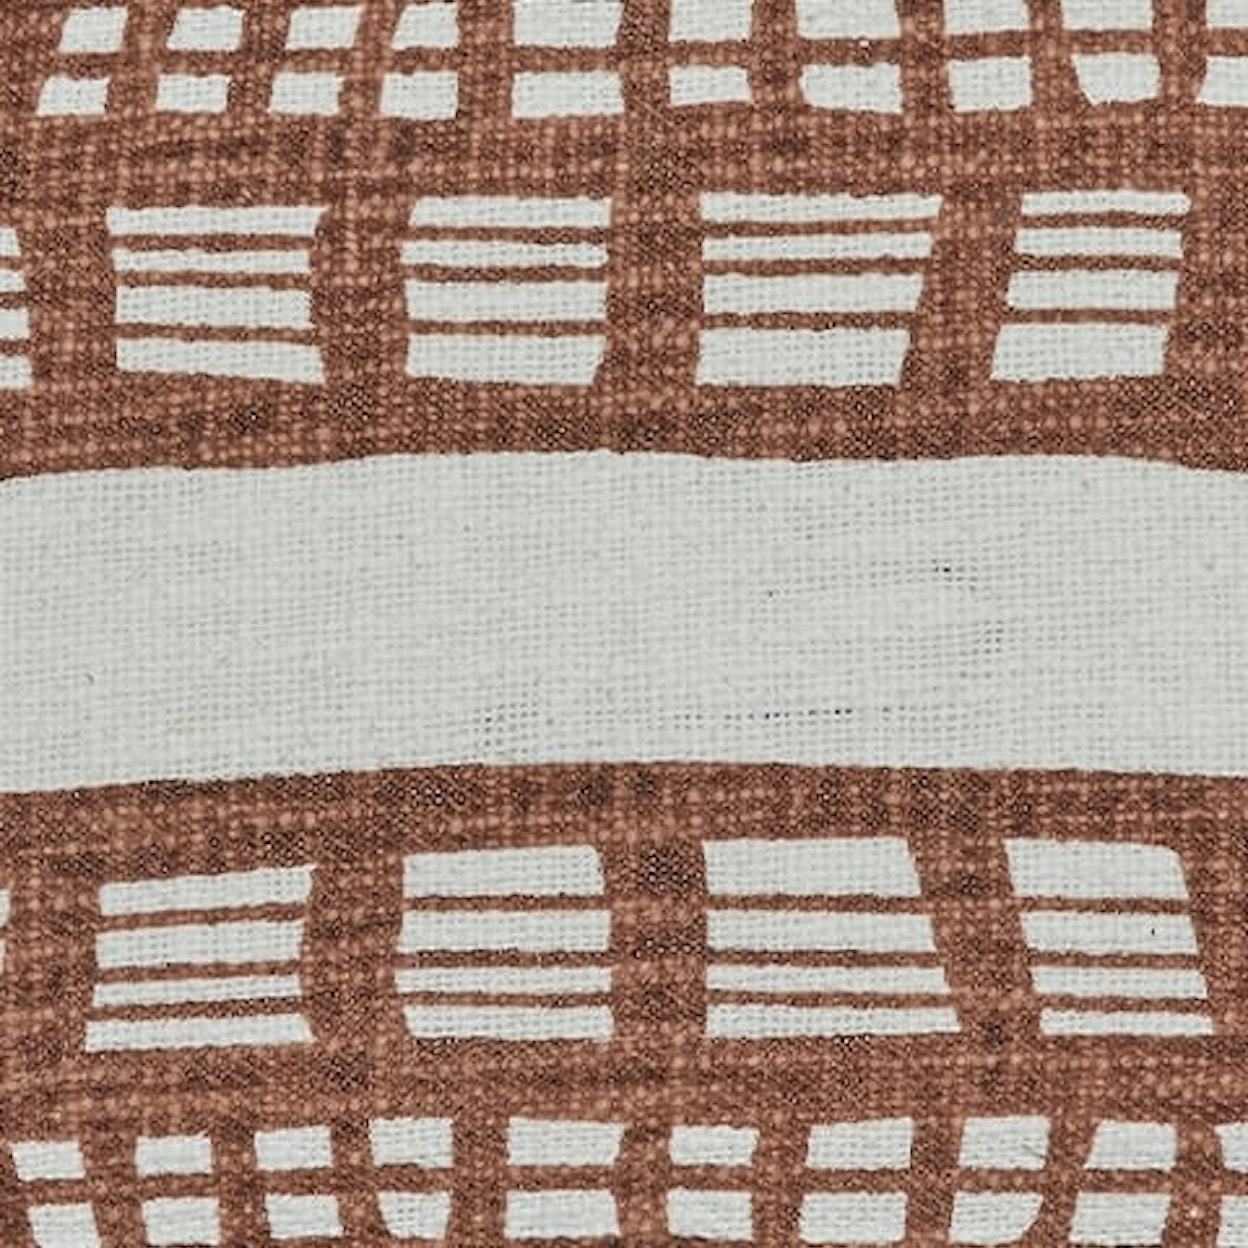 Signature Design Ackford Pillow (Set Of 4)